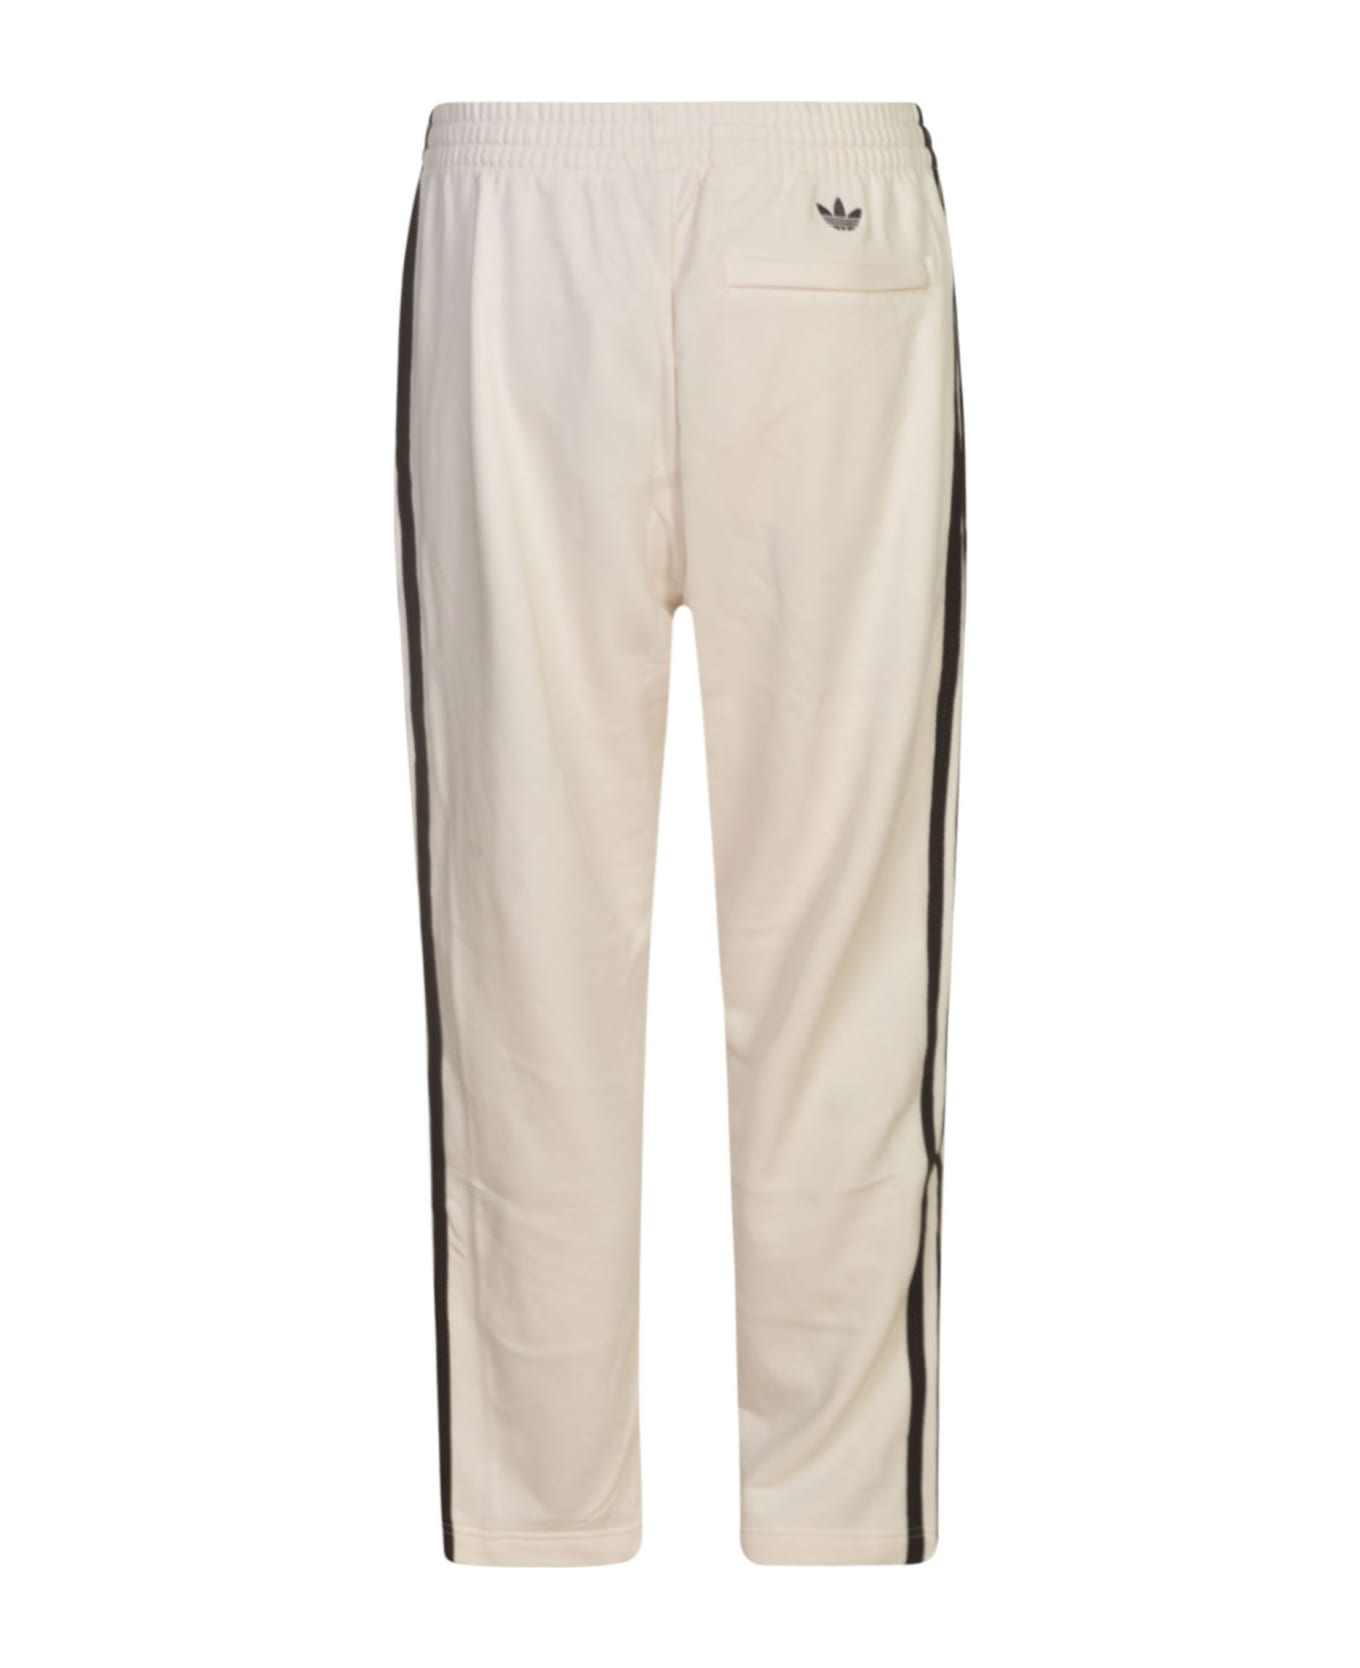 Adidas Originals by Wales Bonner Logo Detail Track Pants - White